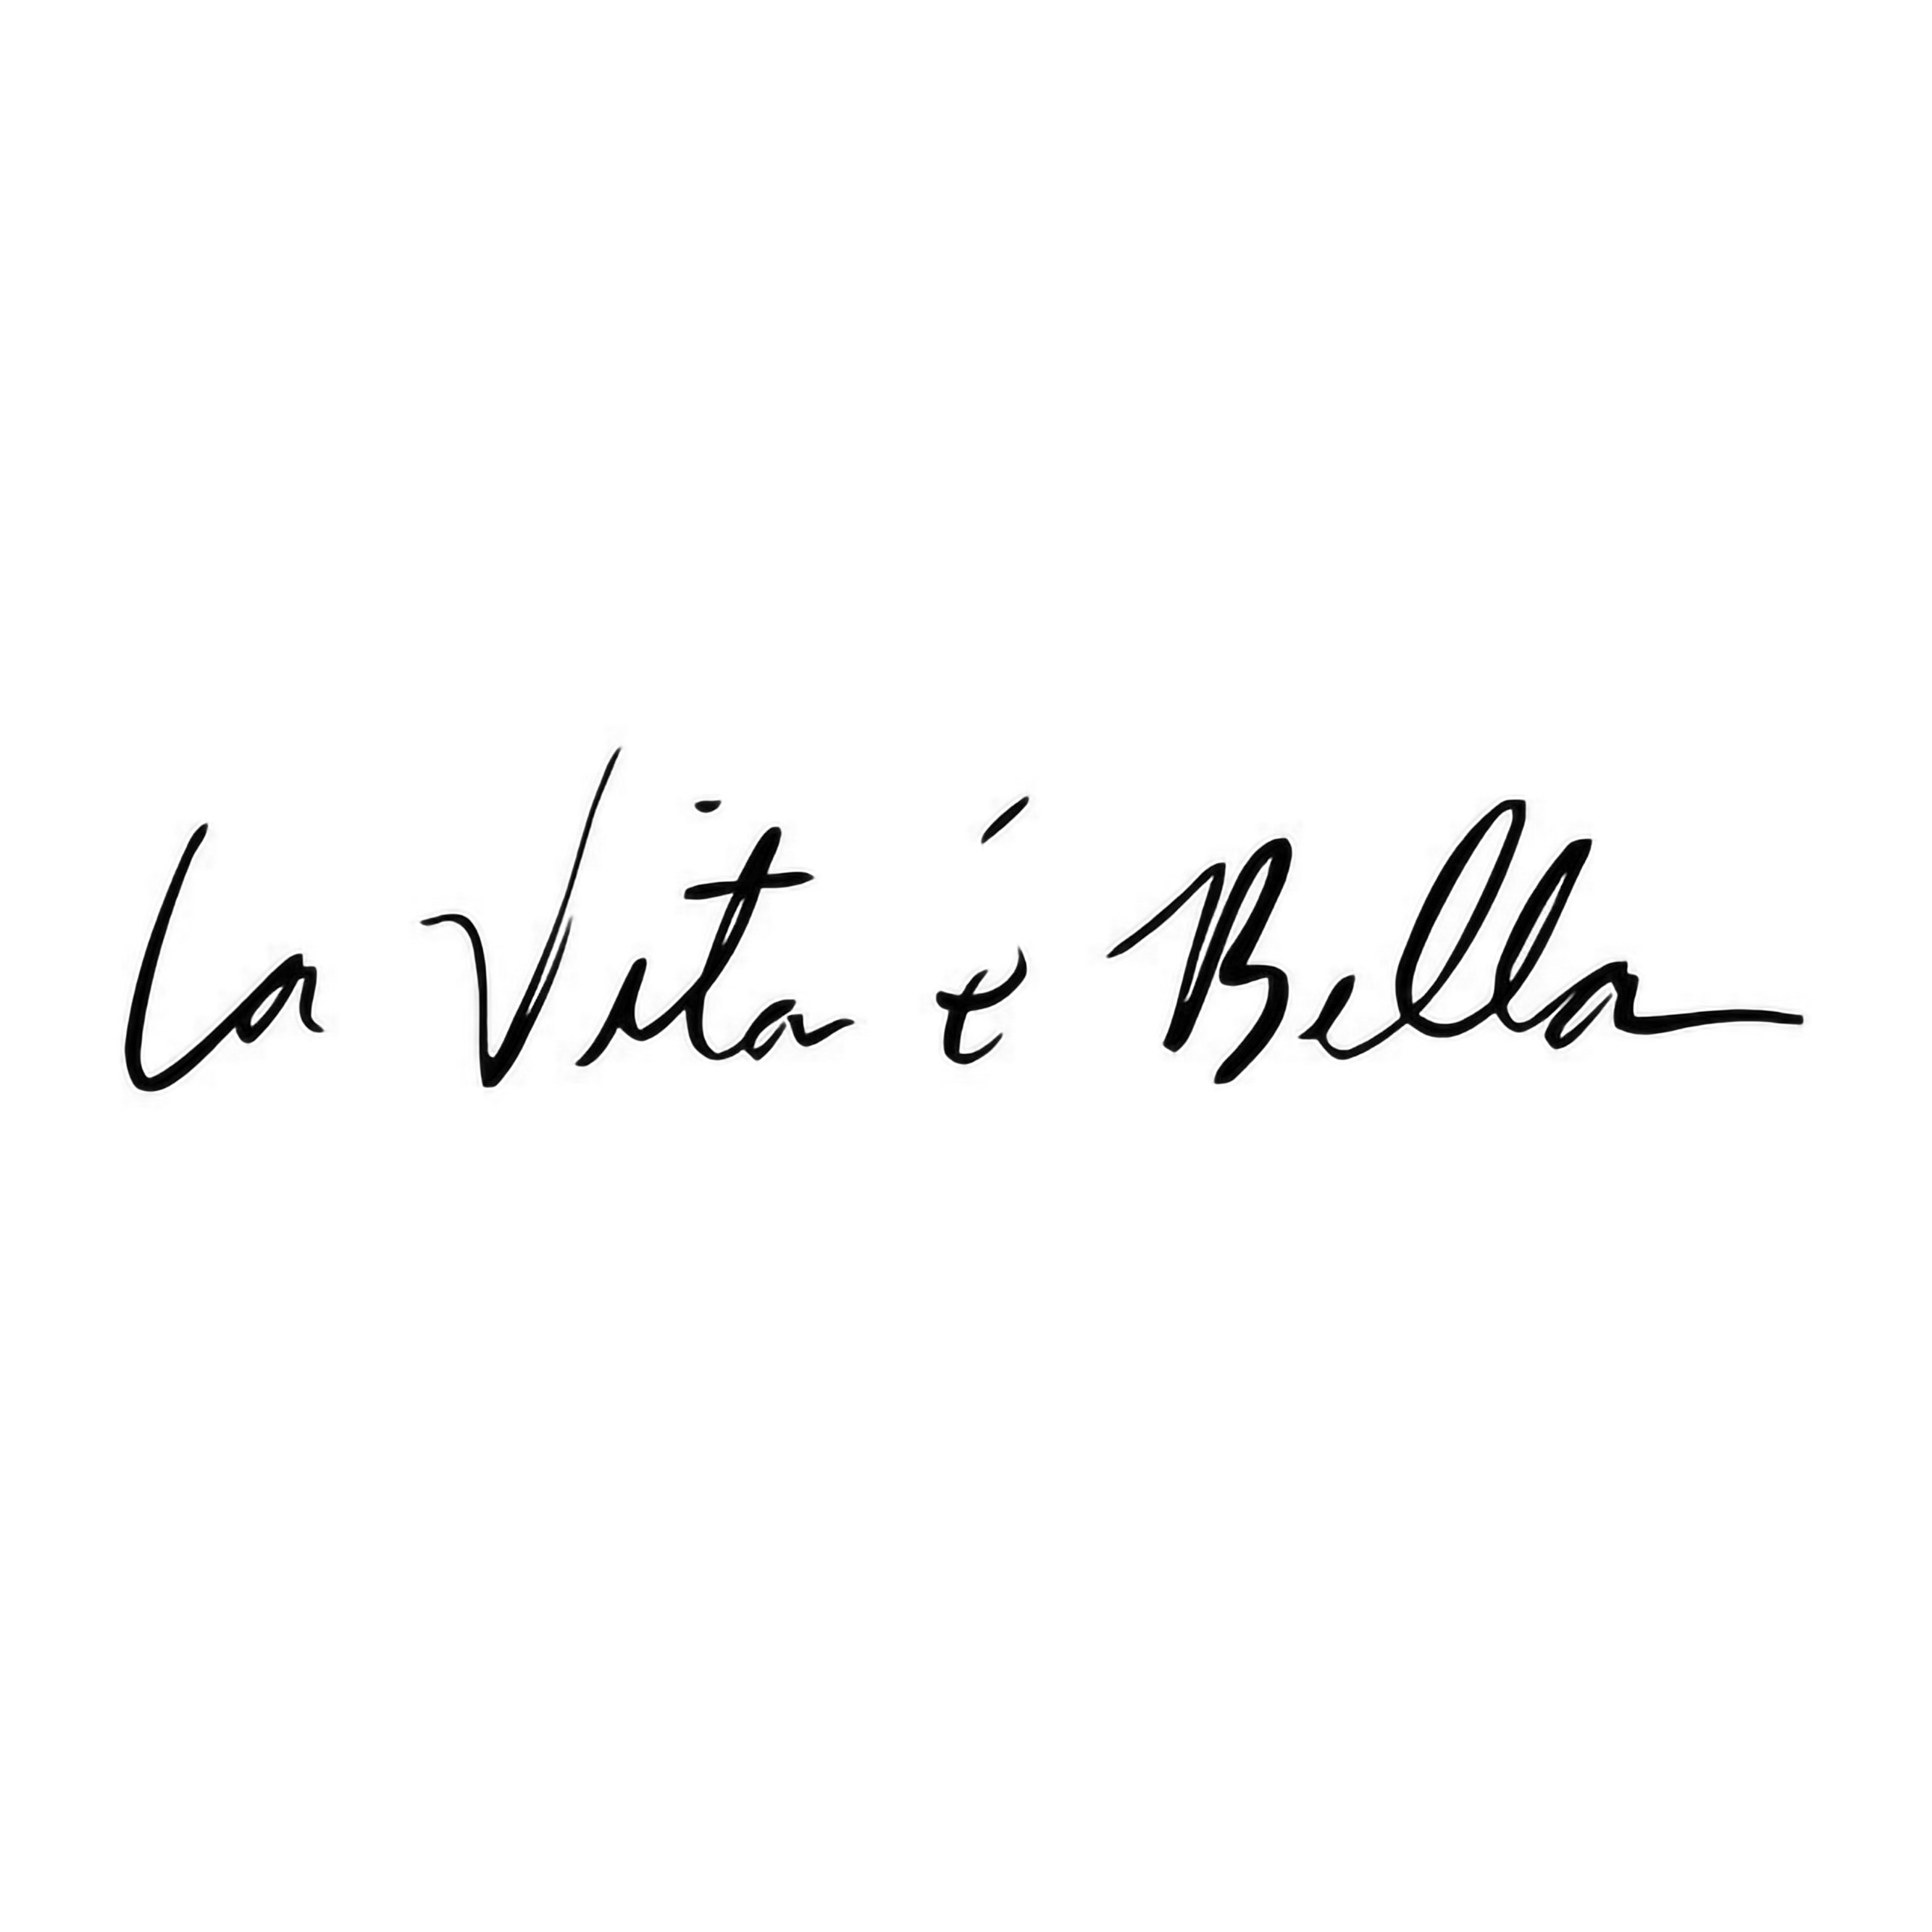 Three Ratels Car Stickers Decals La Vita e Bella Reflective Letters Vinyl Decal Fashion Creative Full Body Styling Sticker